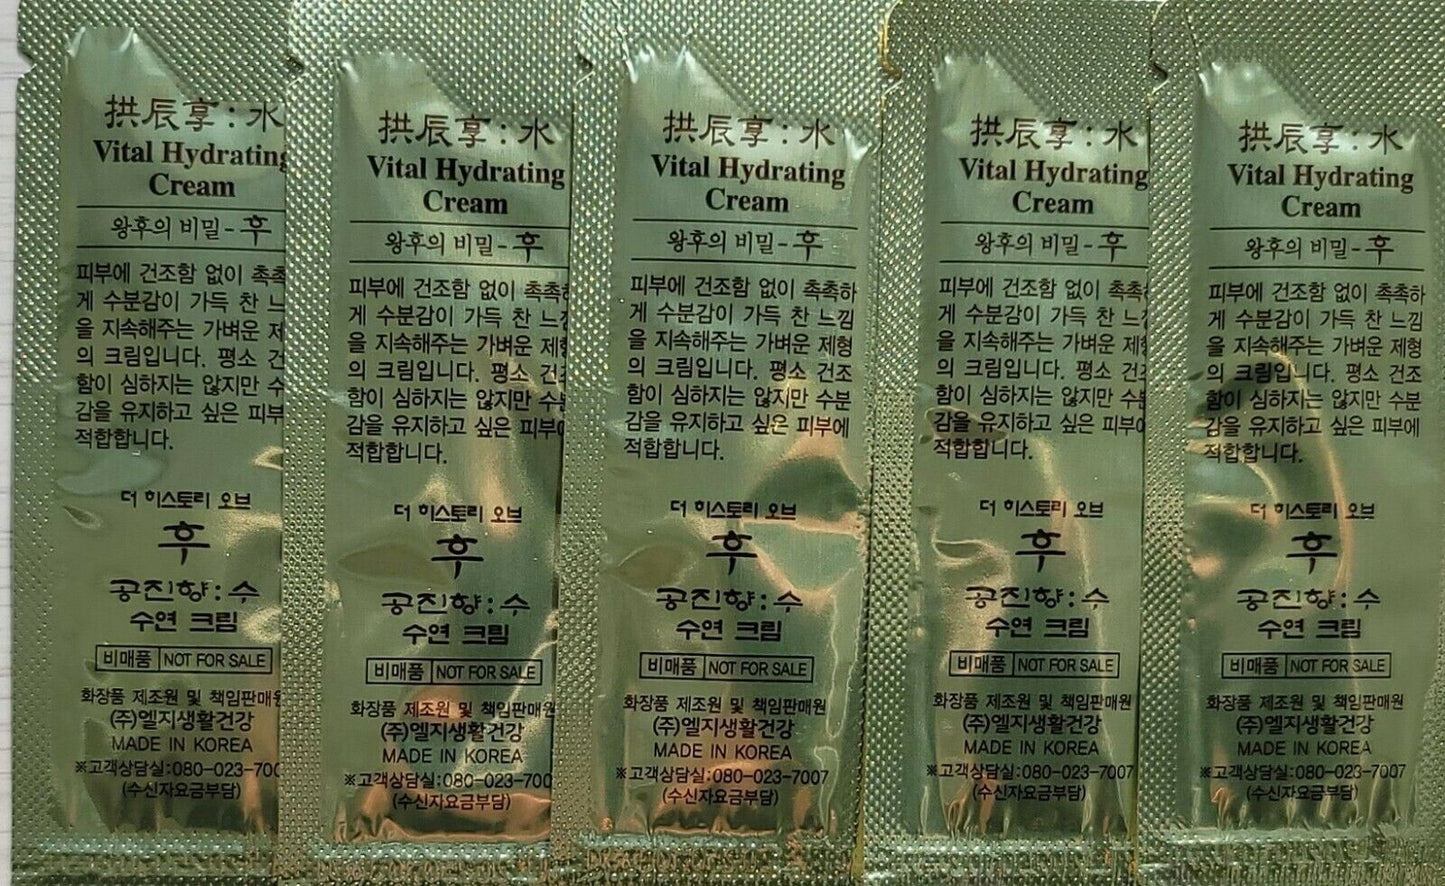 The History of Whoo Gongjinhyang: Seol Brightening Essence 1.52fl.oz+Cream 60pcs